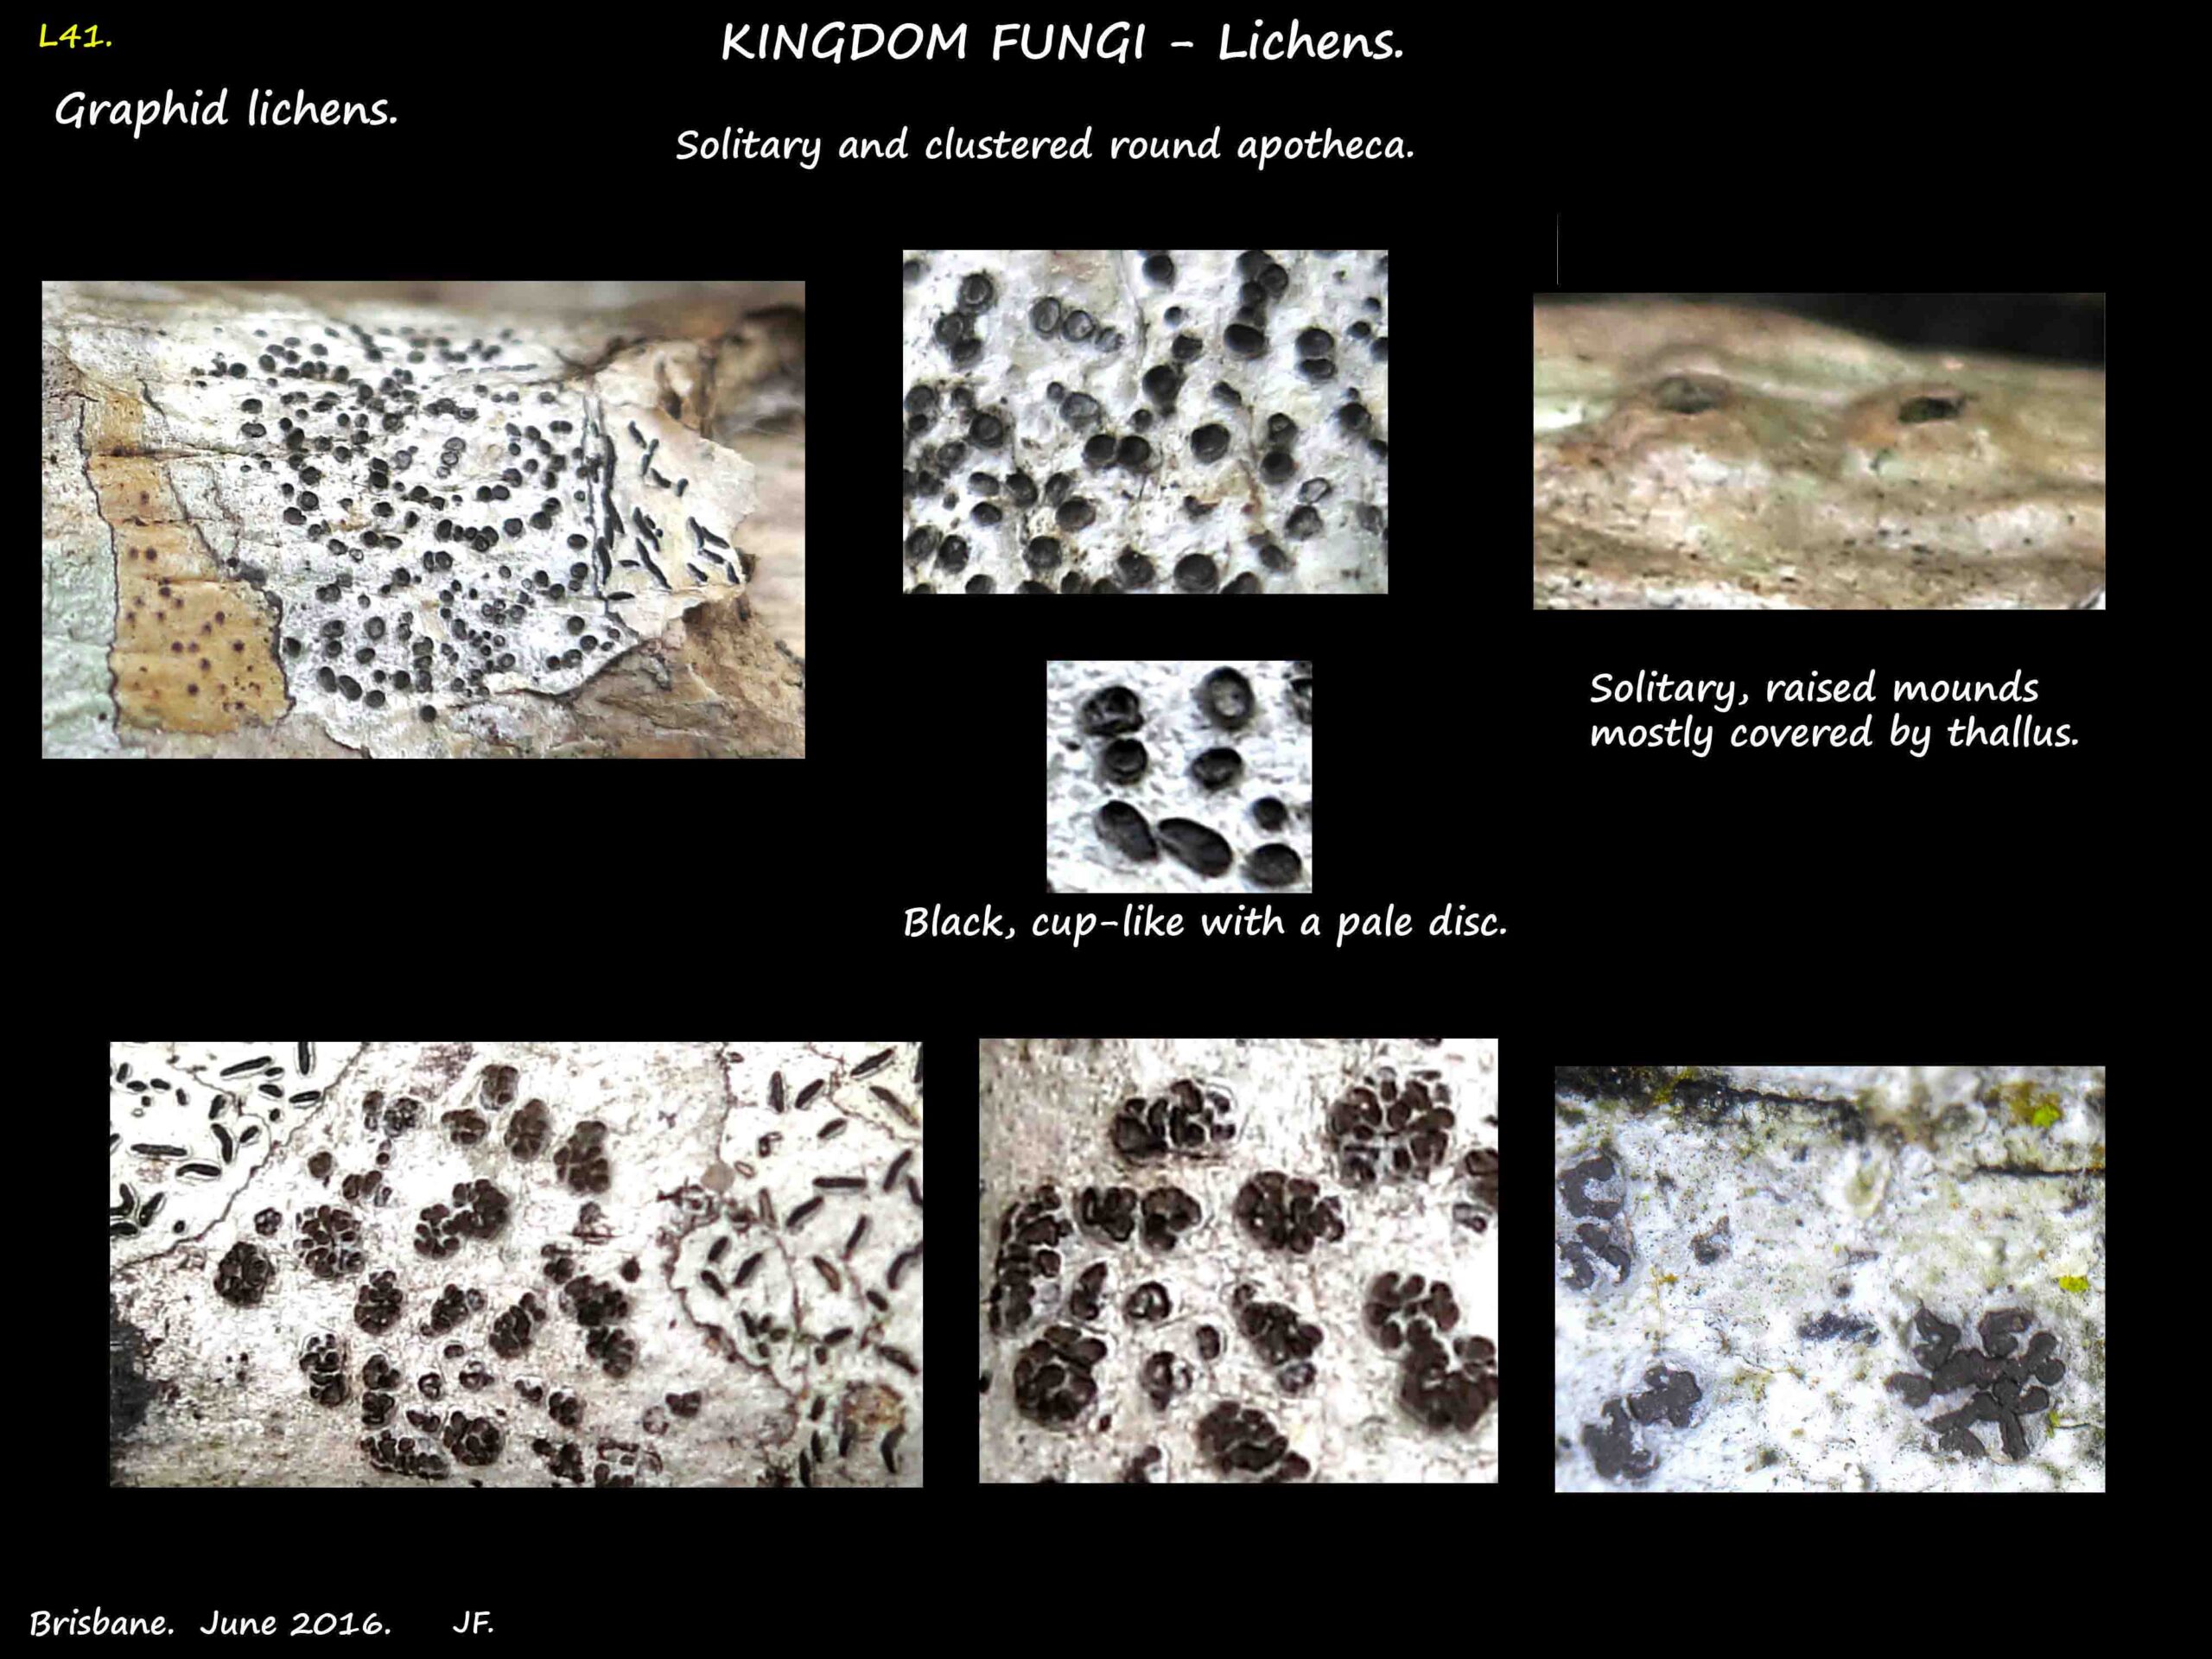 5 Round apotheca in graphid lichens